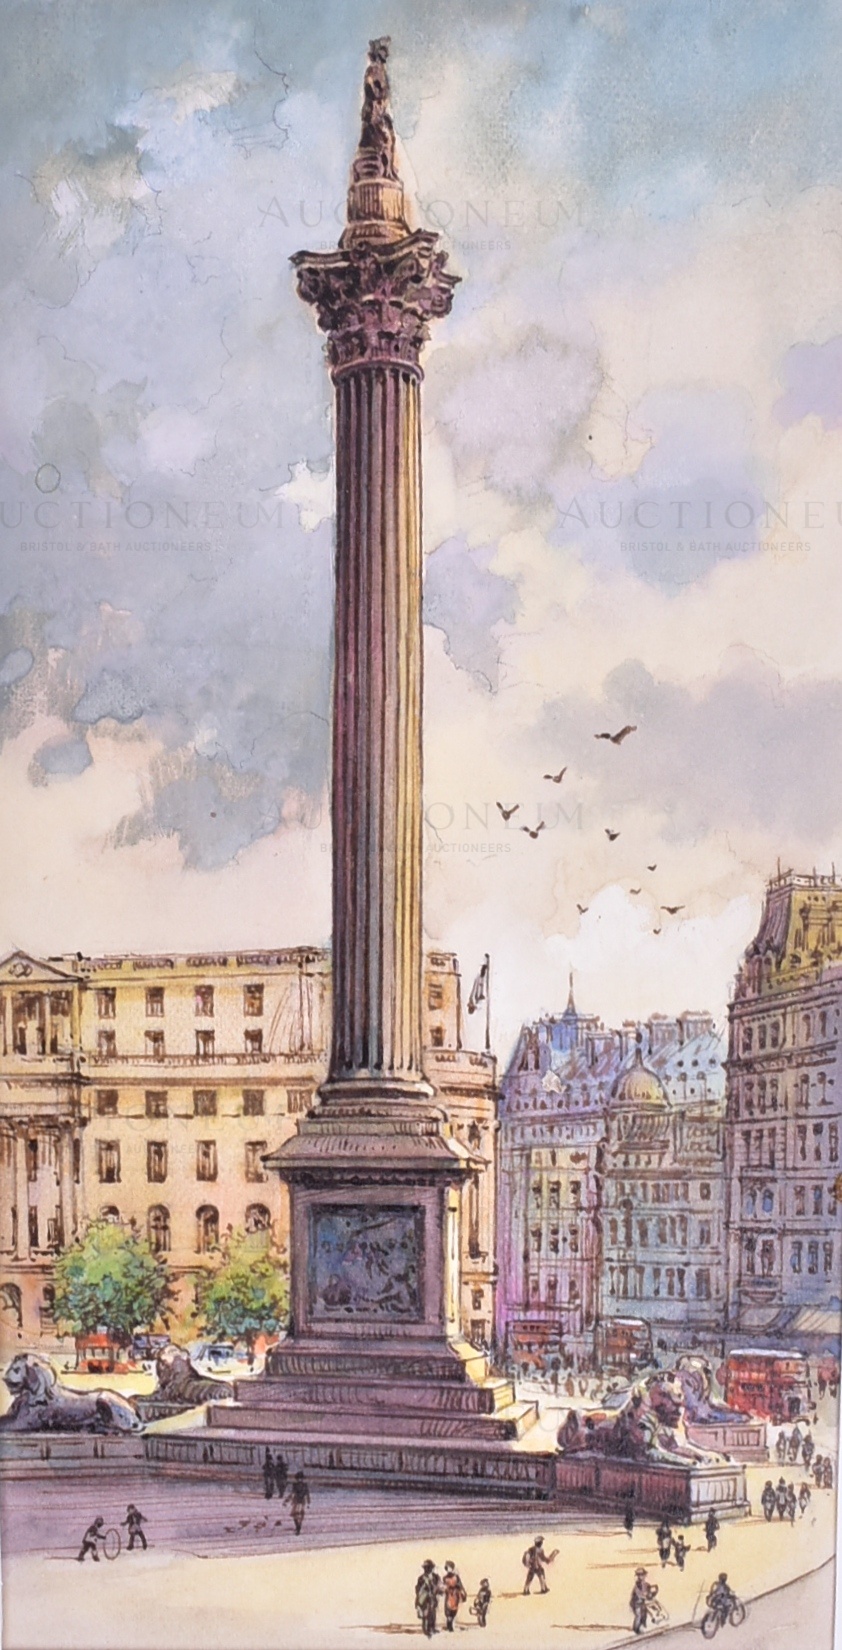 MARDON SON & HALL - LONDON - ORIGINAL CIGARETTE CARD ARTWORK - Image 2 of 5